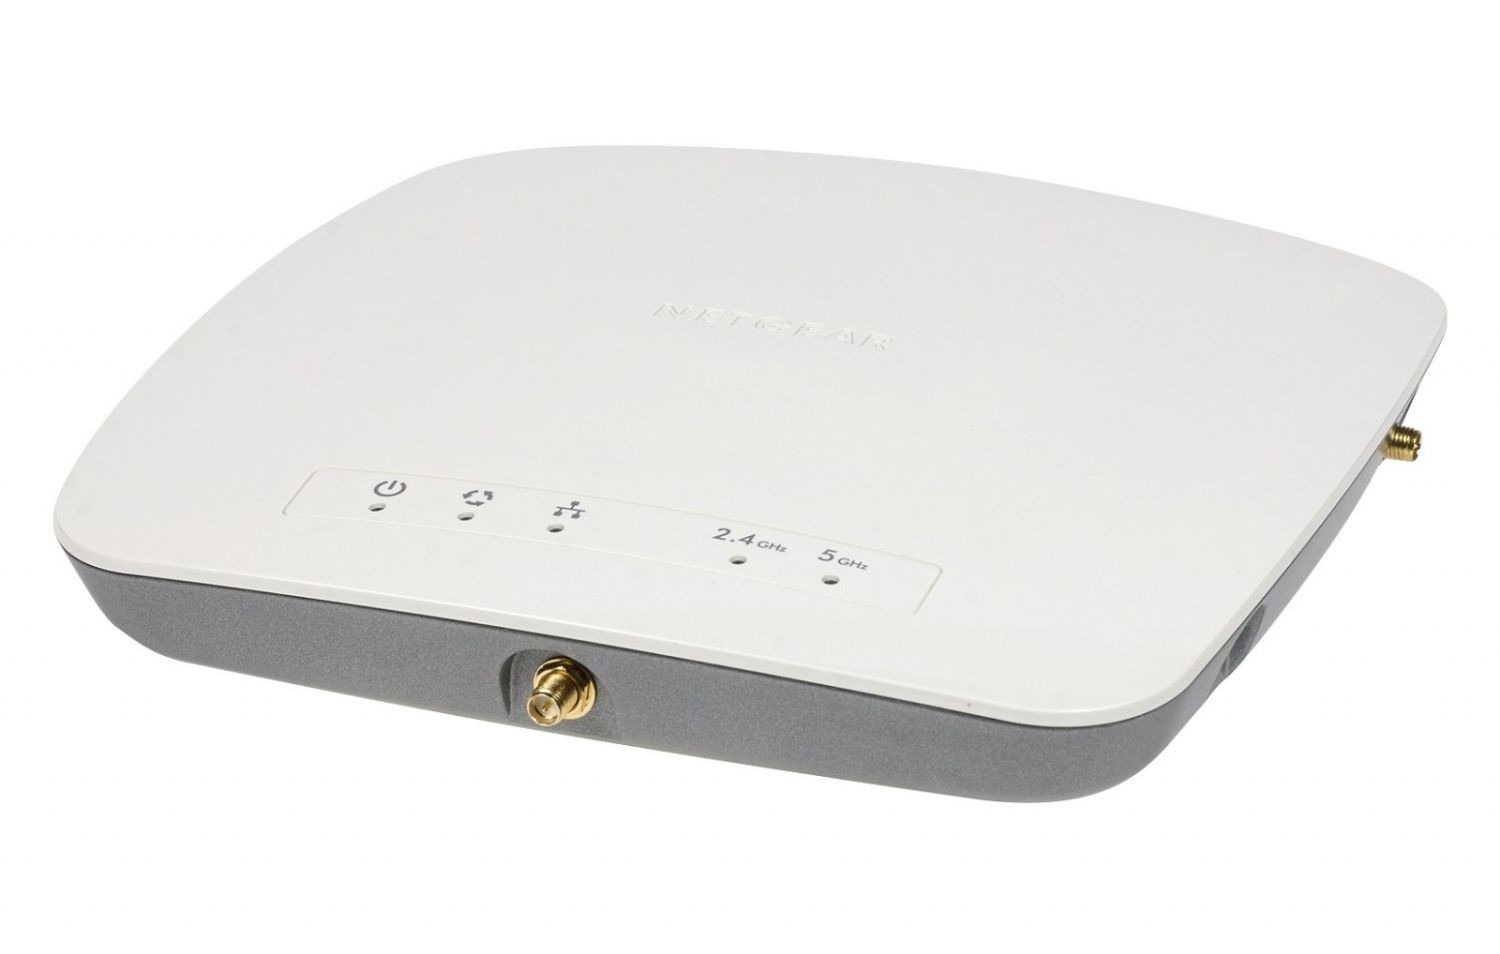 Netgear WAC730-10000S ProSAFE 3x3 Business Dual Band Wireless-AC 1750 Access Point (WAC730)